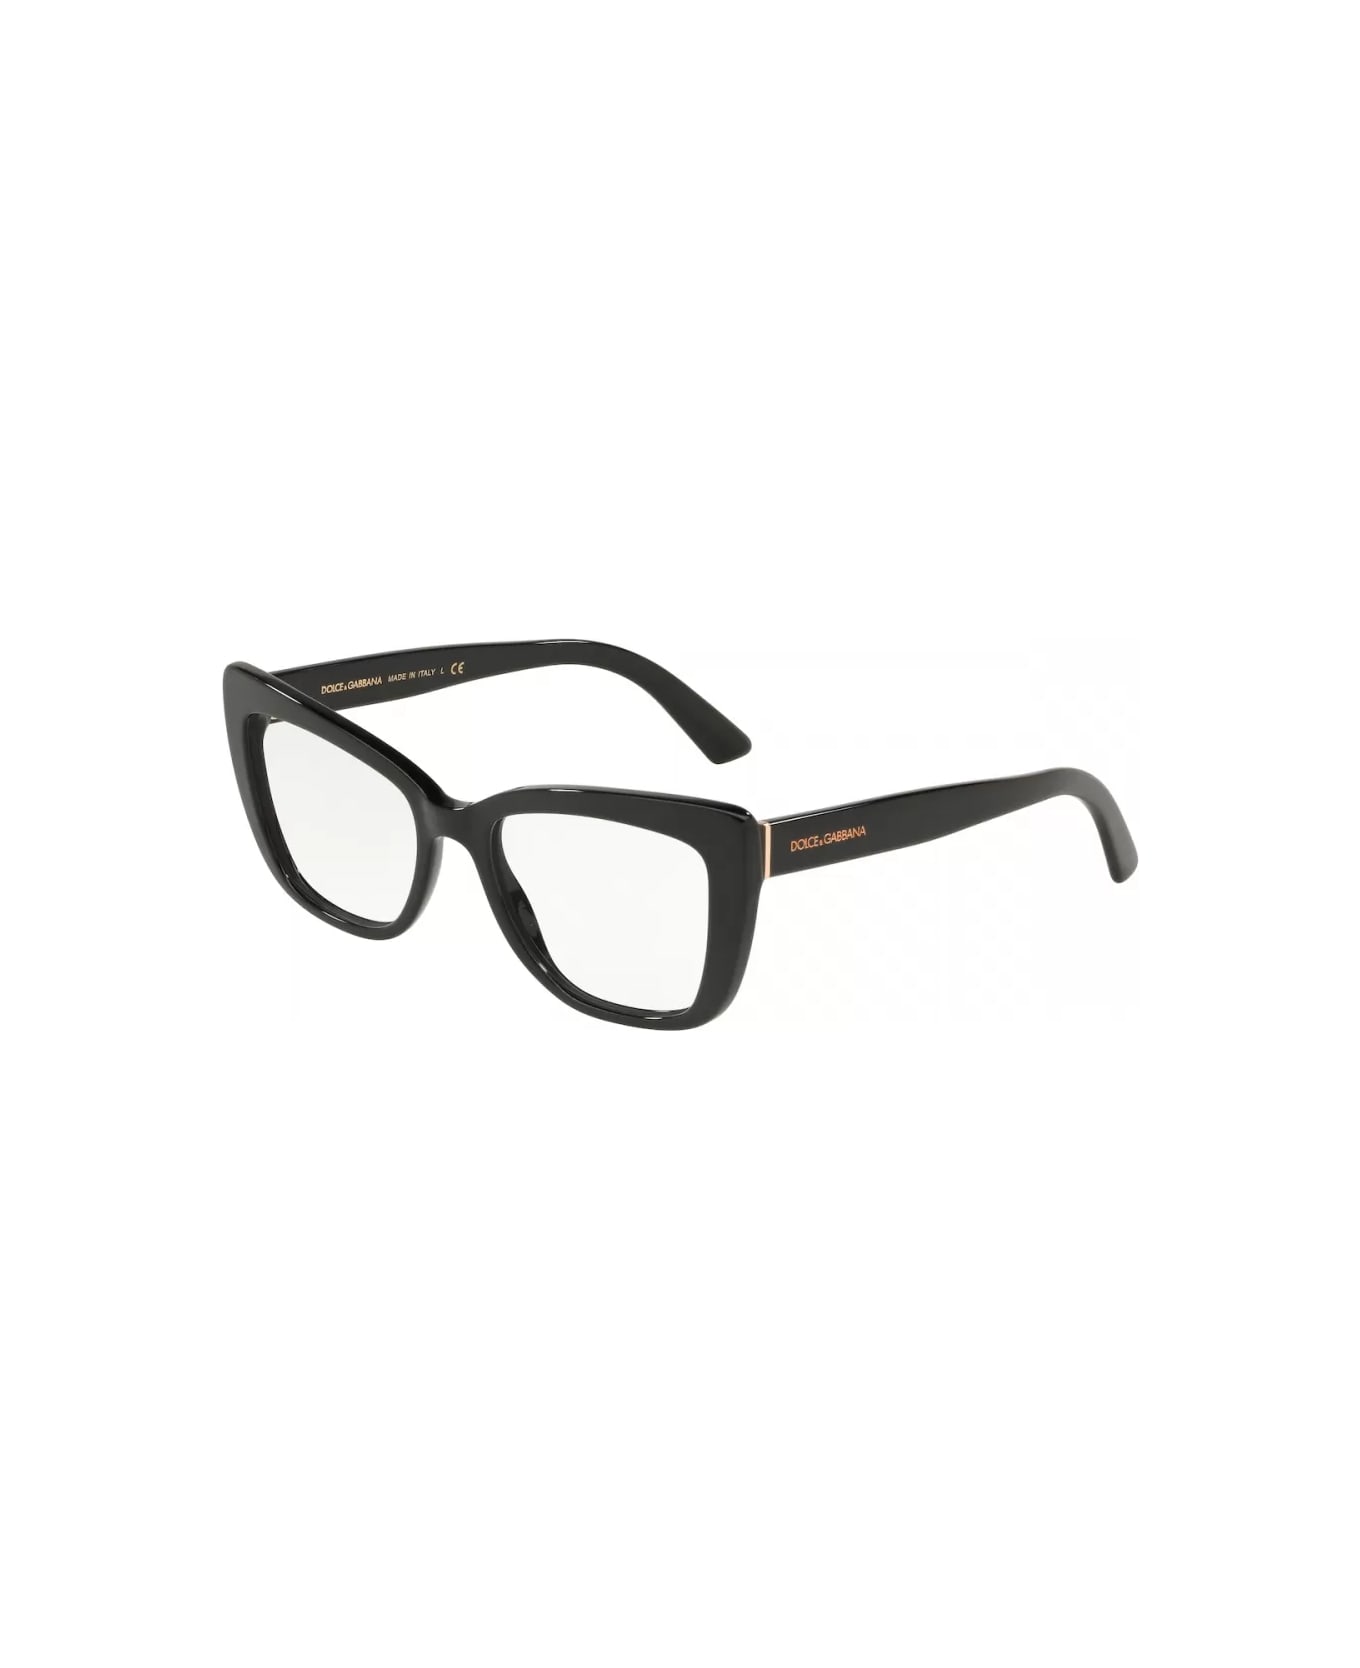 Dolce & Gabbana Eyewear DG3308 501 Glasses アイウェア